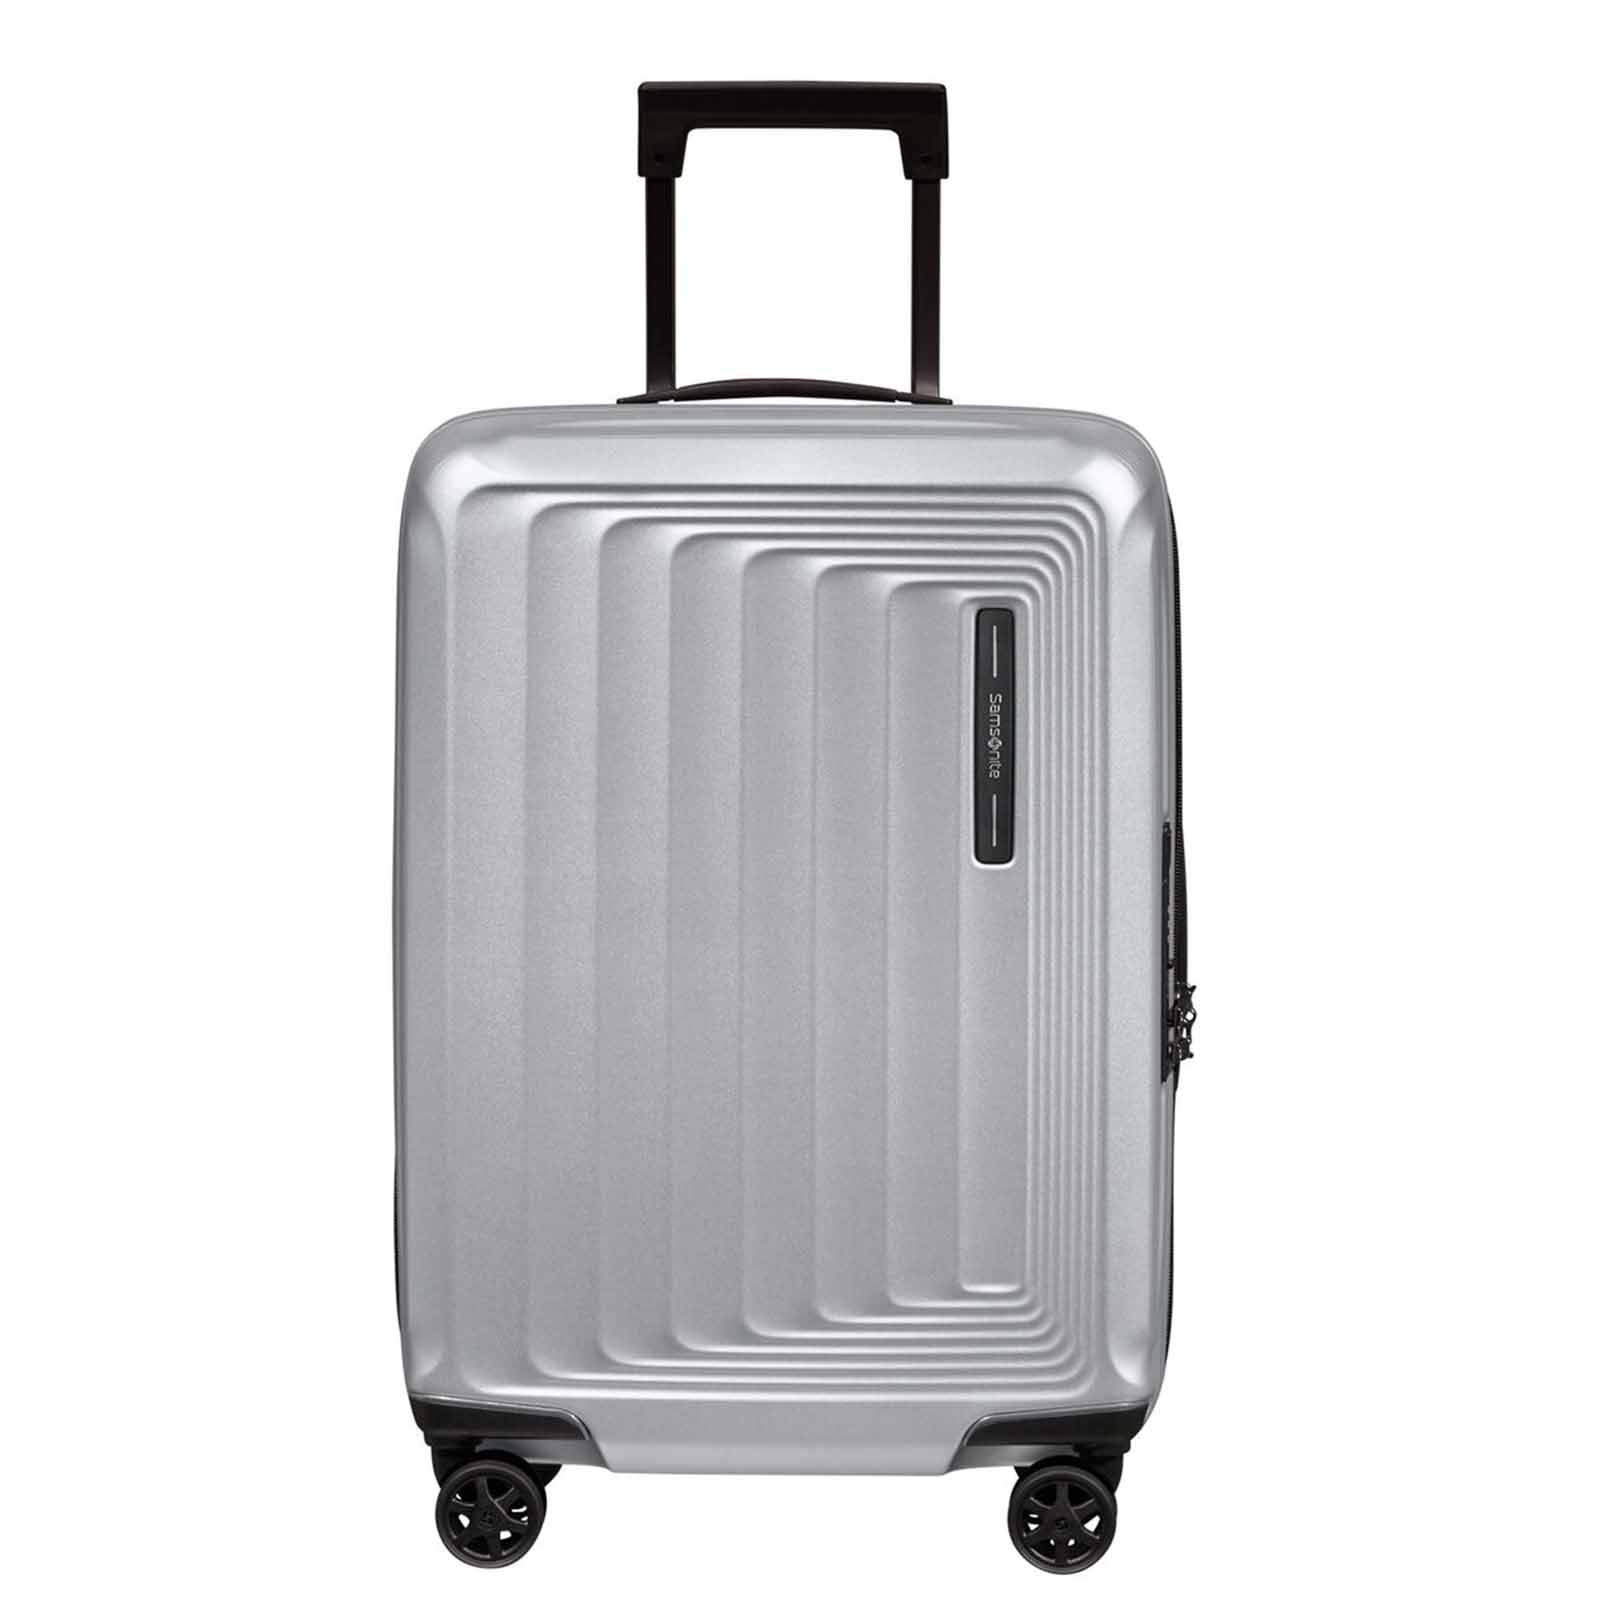 Samsonite-Nuon-55cm-Carry-On-Suitcase-Matt-Silver-Front